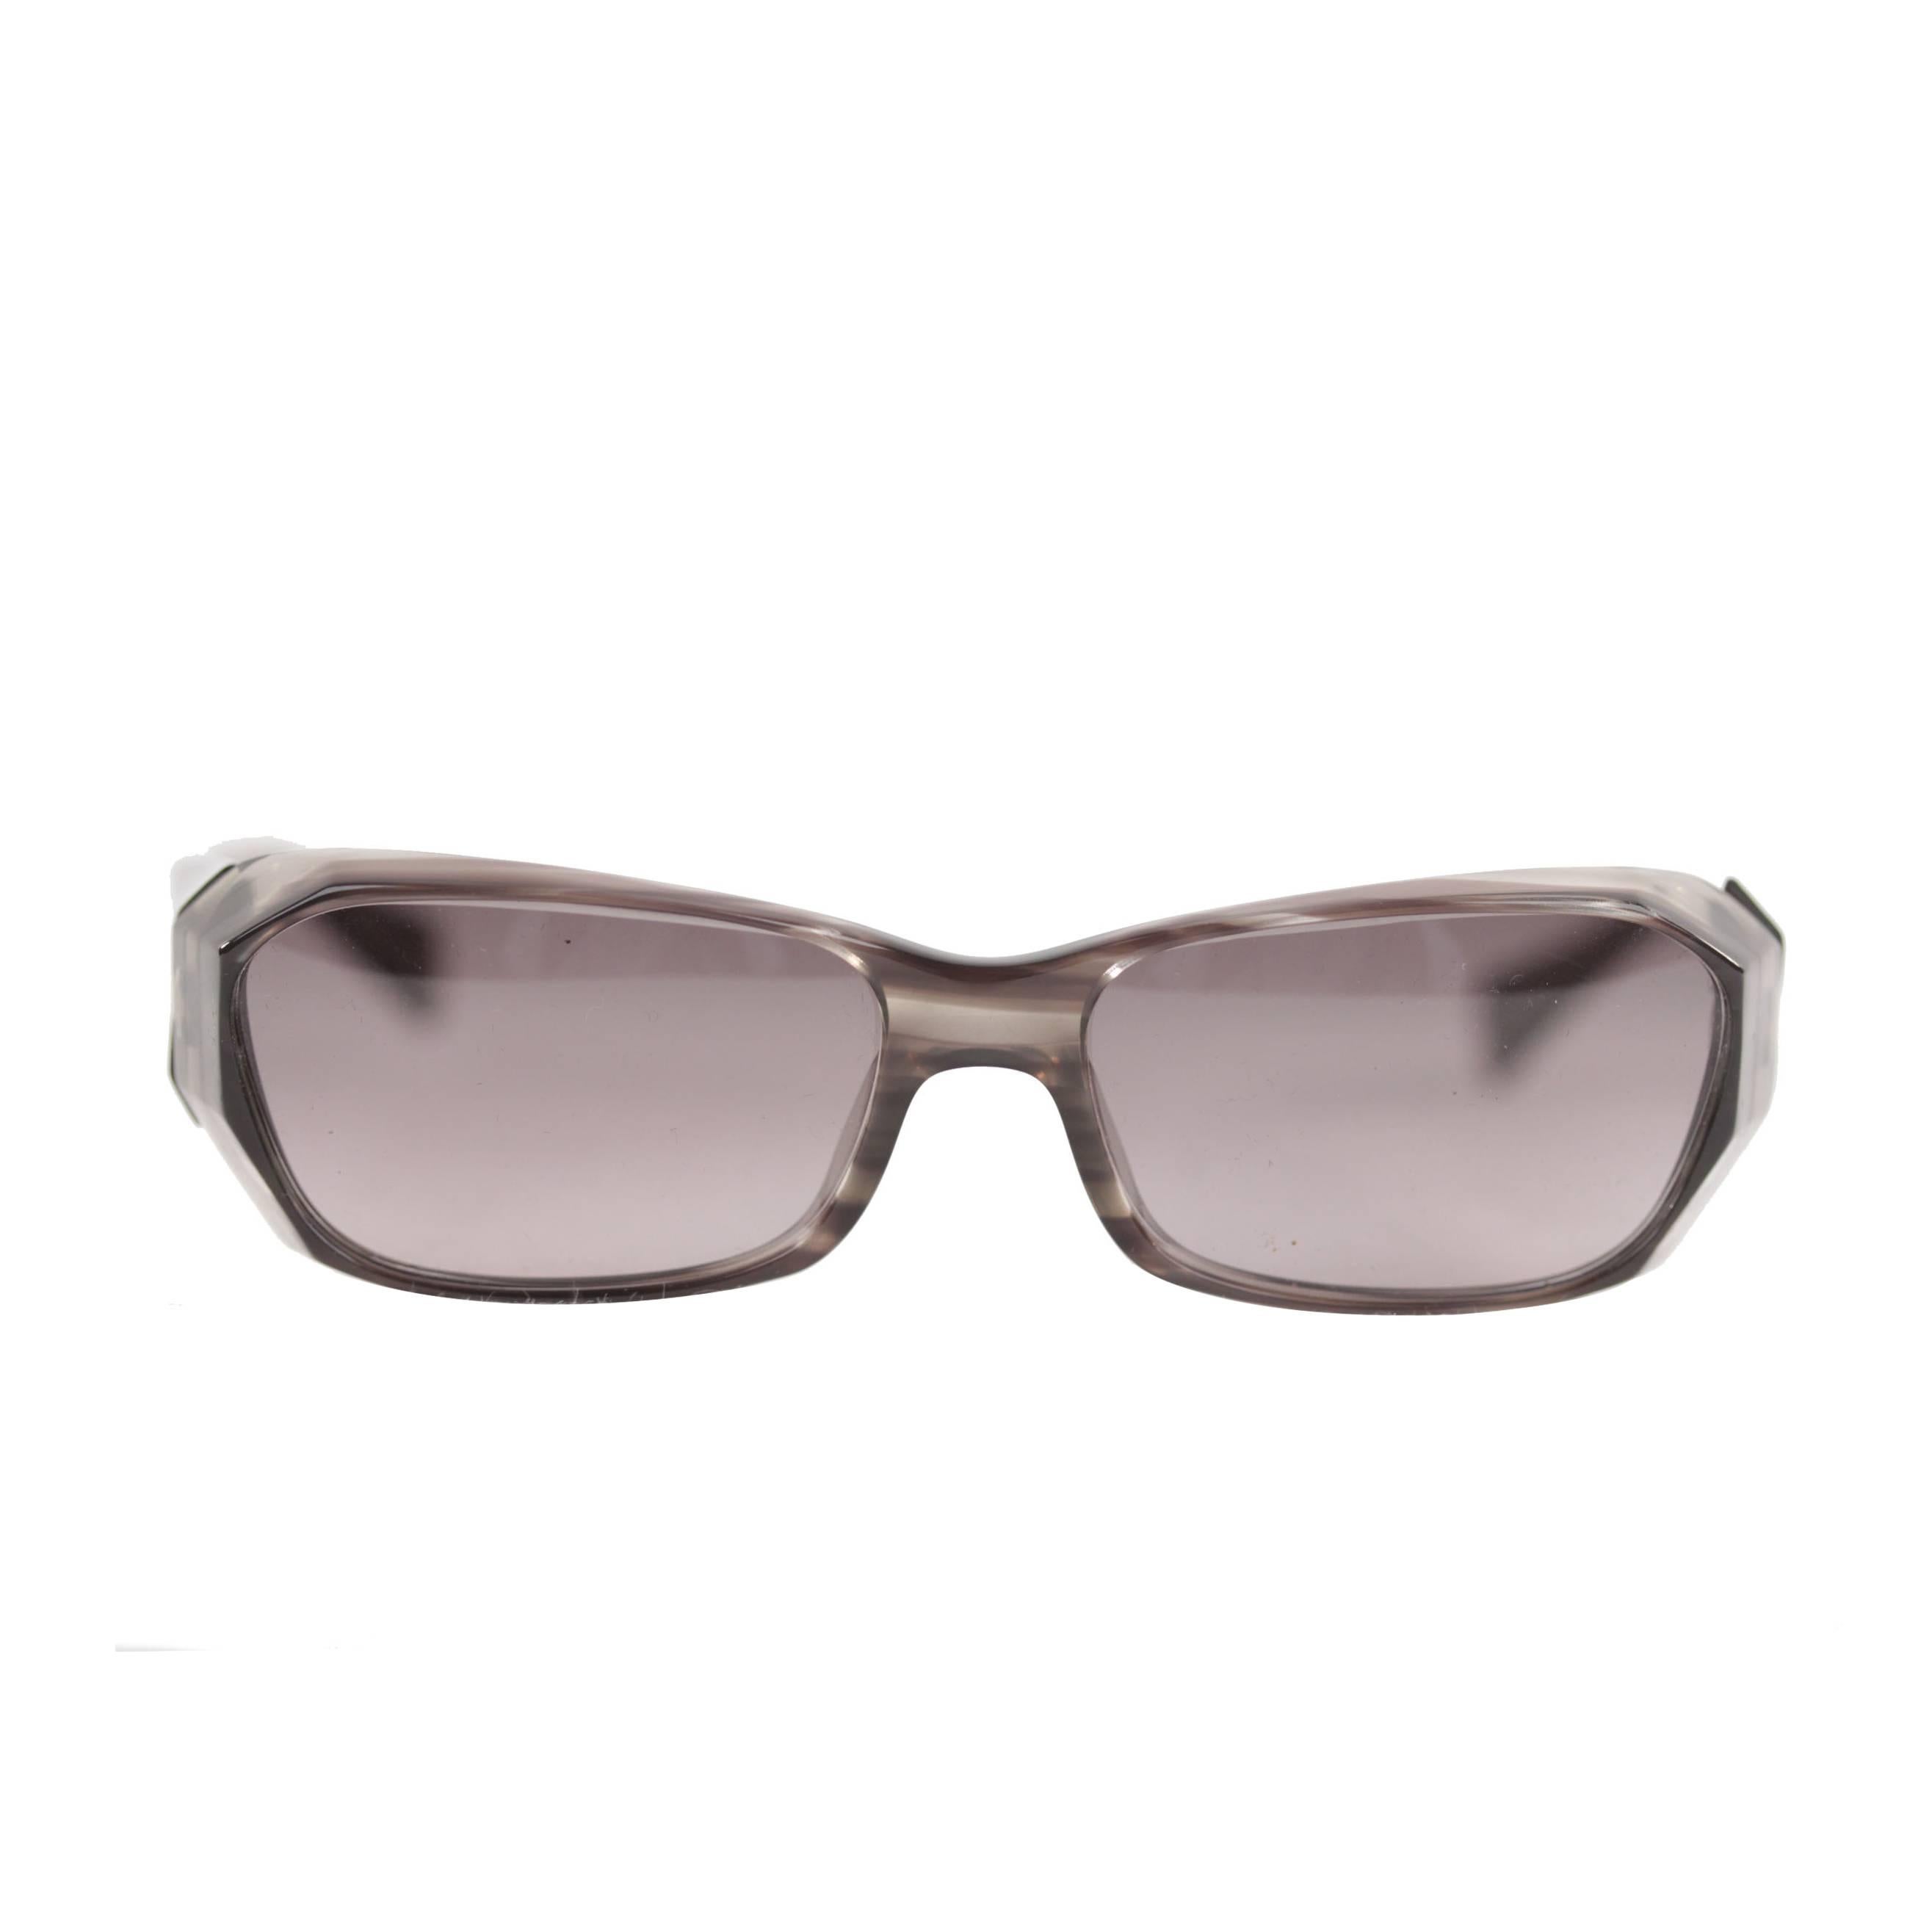 ALAIN MIKLI paris vintage sunglasses A0323-03 gray frame EYEWEAR w/CASE